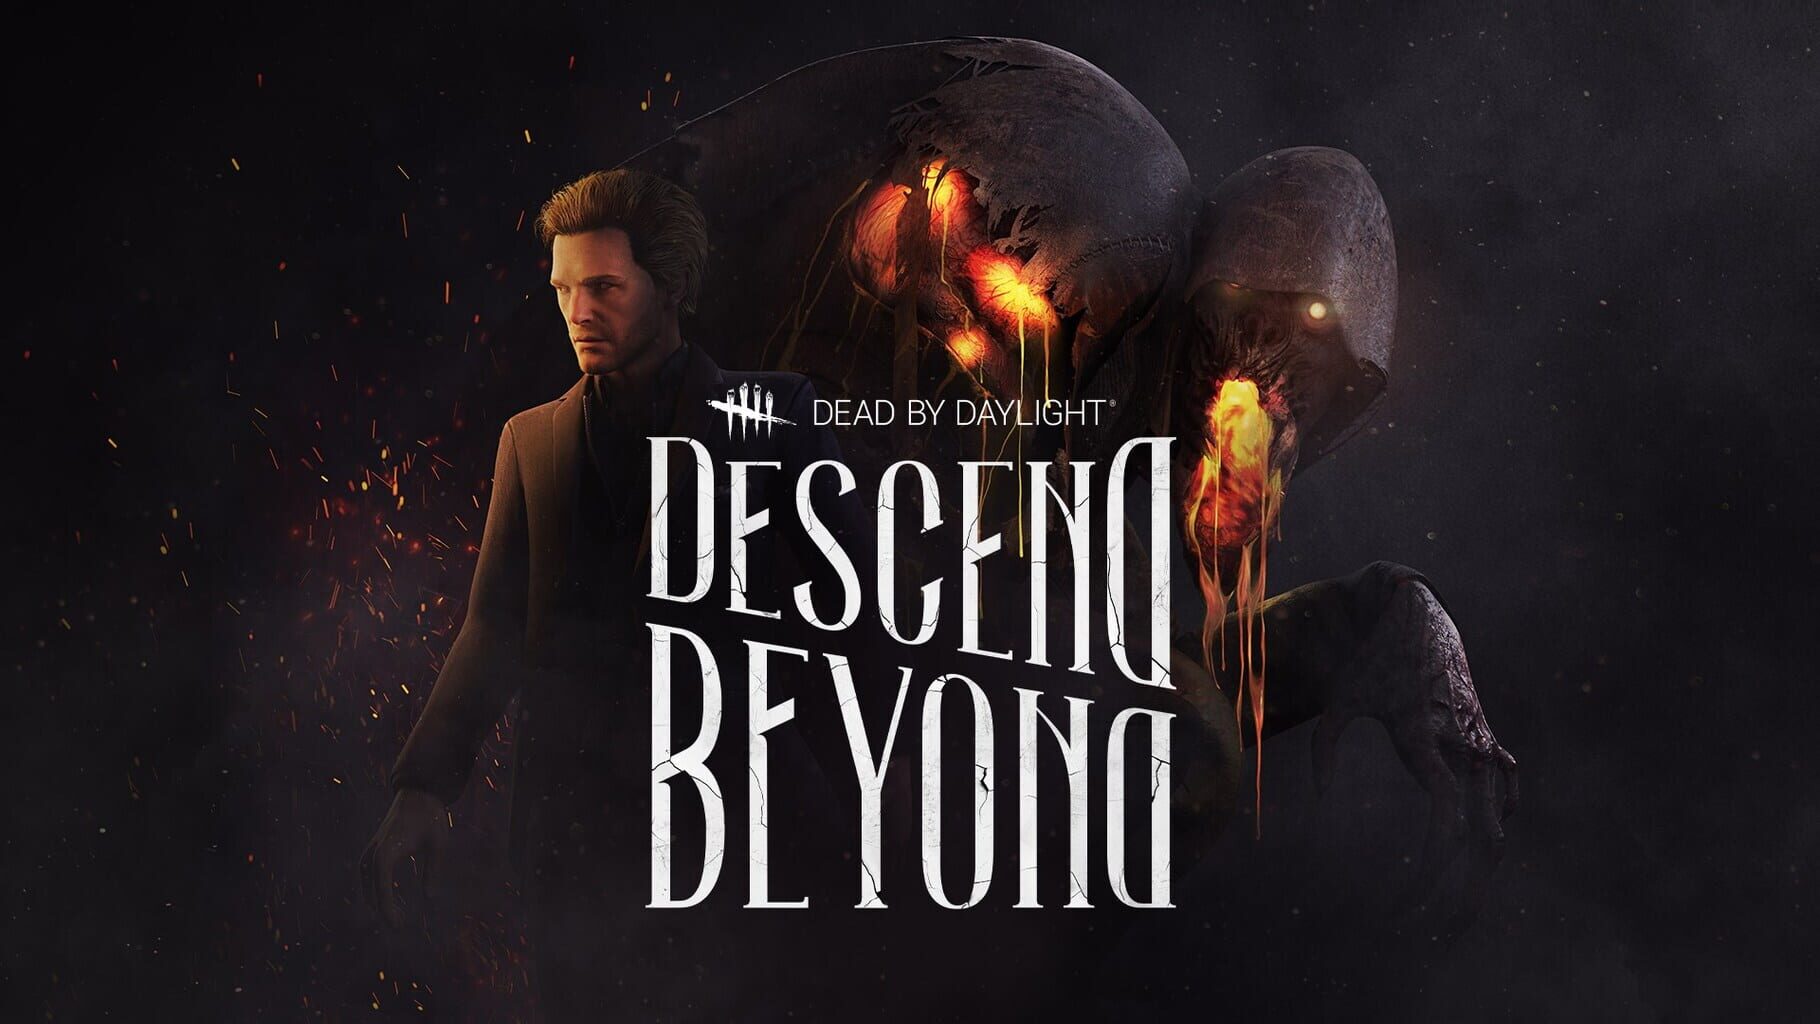 Dead by Daylight: Descend Beyond Chapter artwork